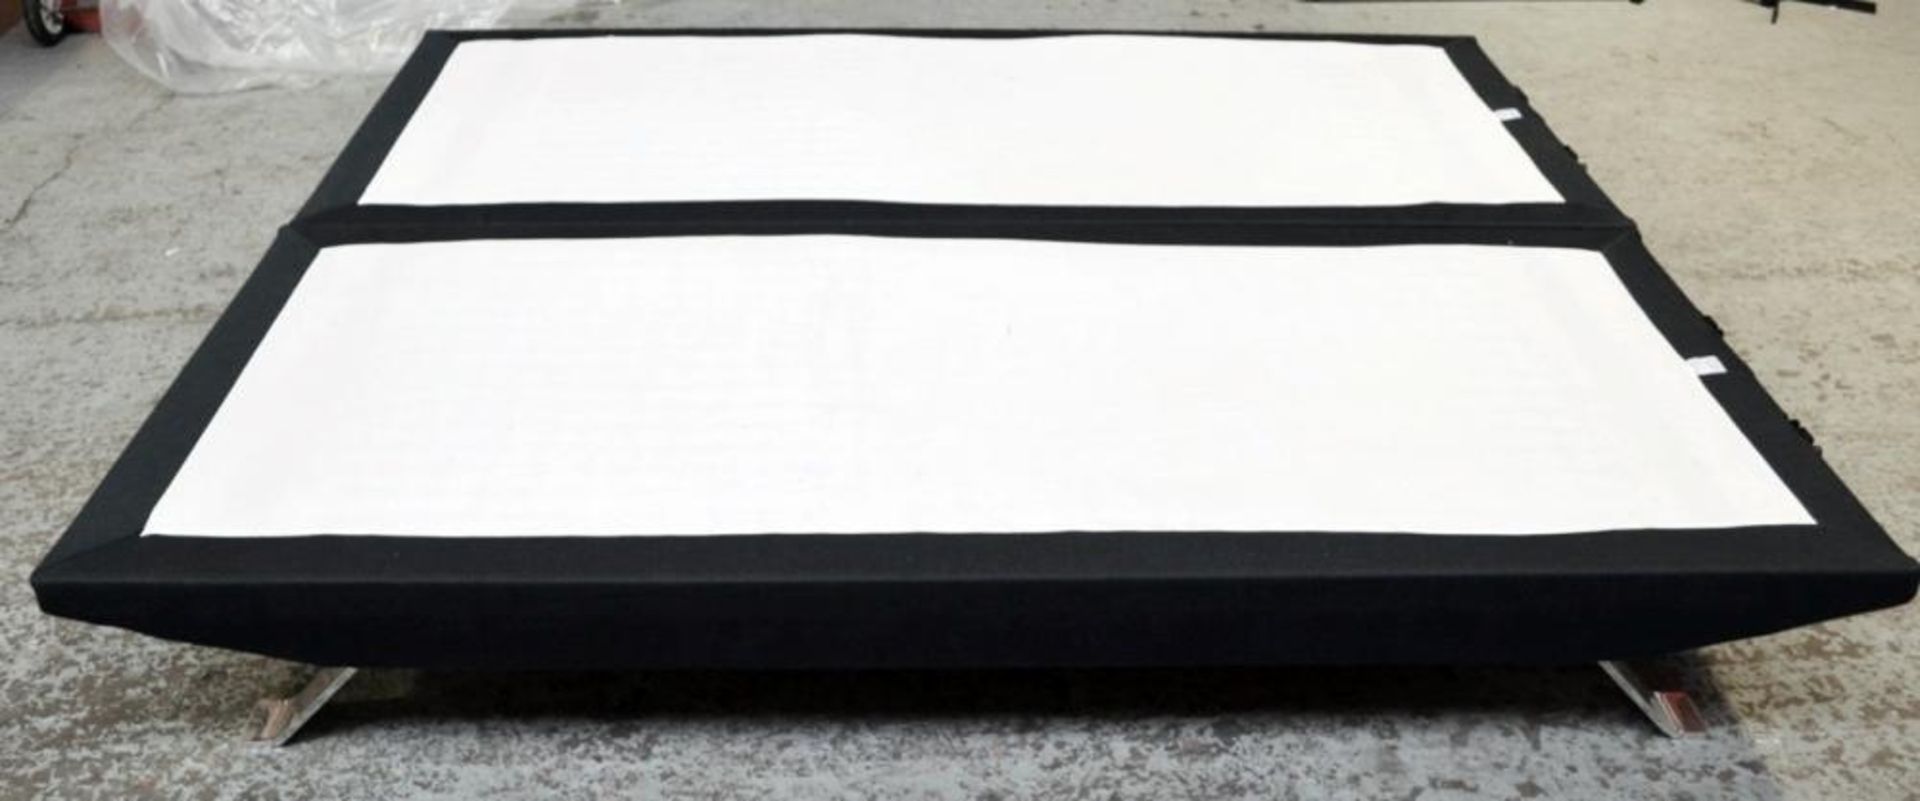 1 x Jensen EDEN Adjustable Superking Bed Base - W180 x L210 x H34cm - Colour: Black - CL087 - Ref: 2 - Image 7 of 13